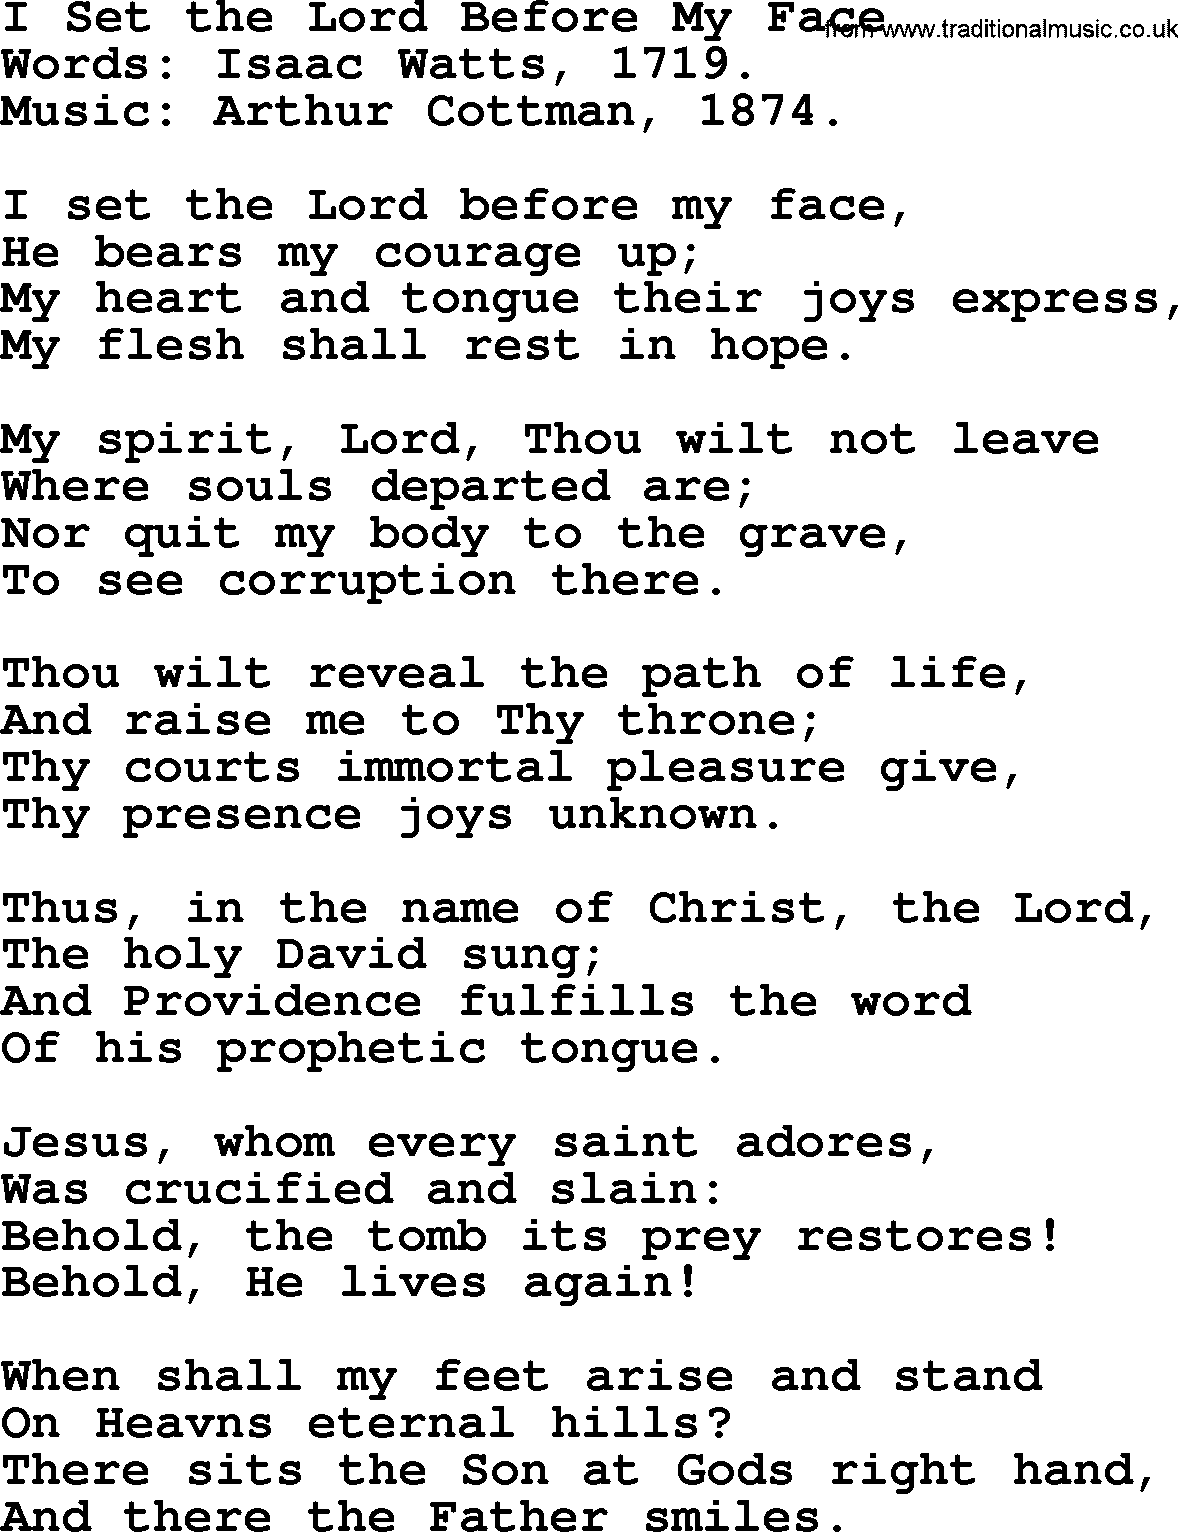 Isaac Watts Christian hymn: I Set the Lord Before My Face- lyricss